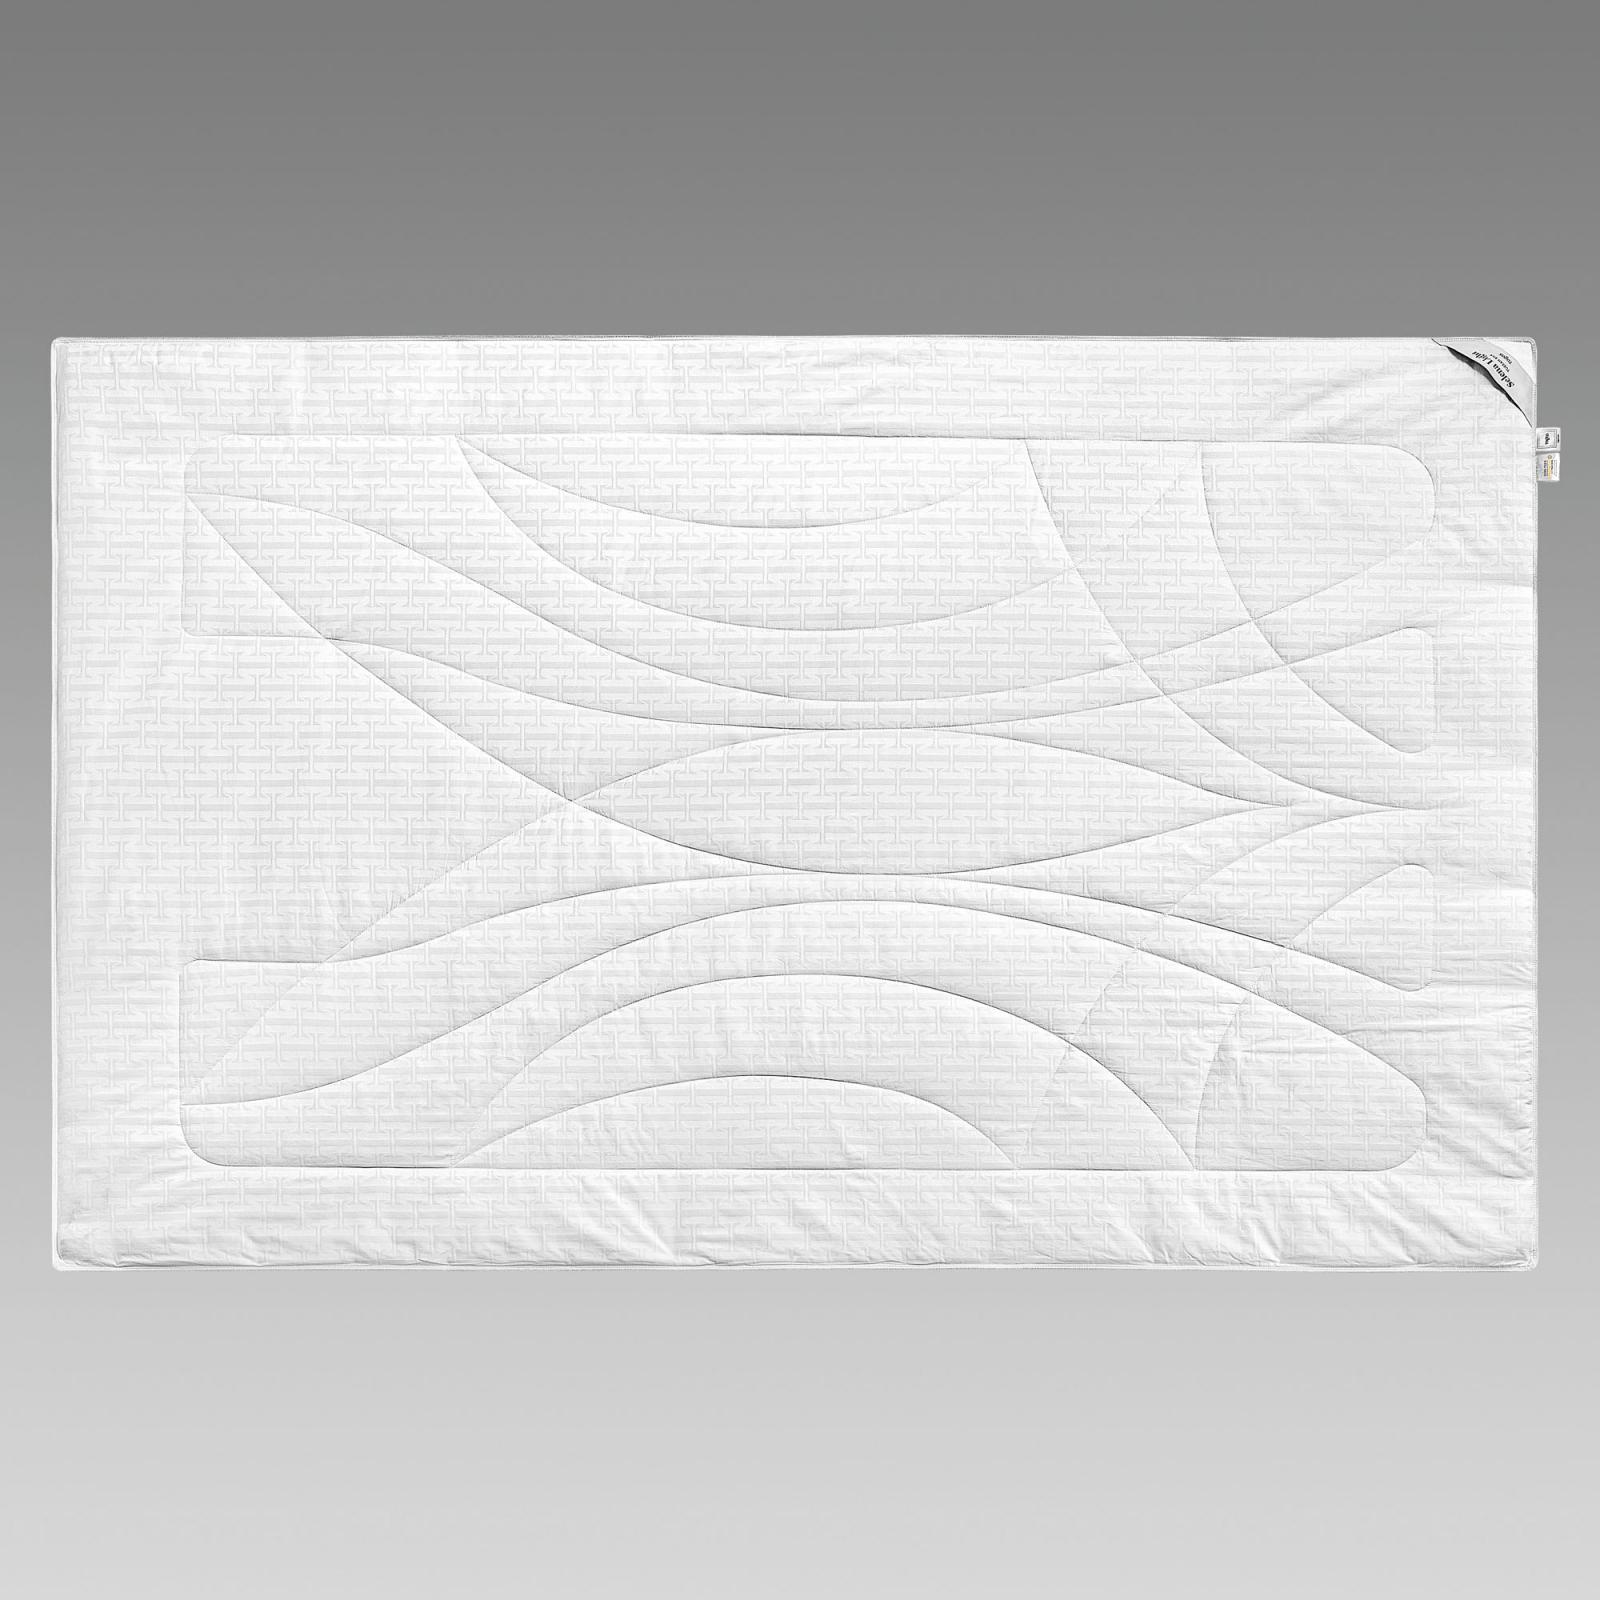 Одеяло Togas селена лайт 200х210 см (20.04.16.0108), размер 200х210 см - фото 4